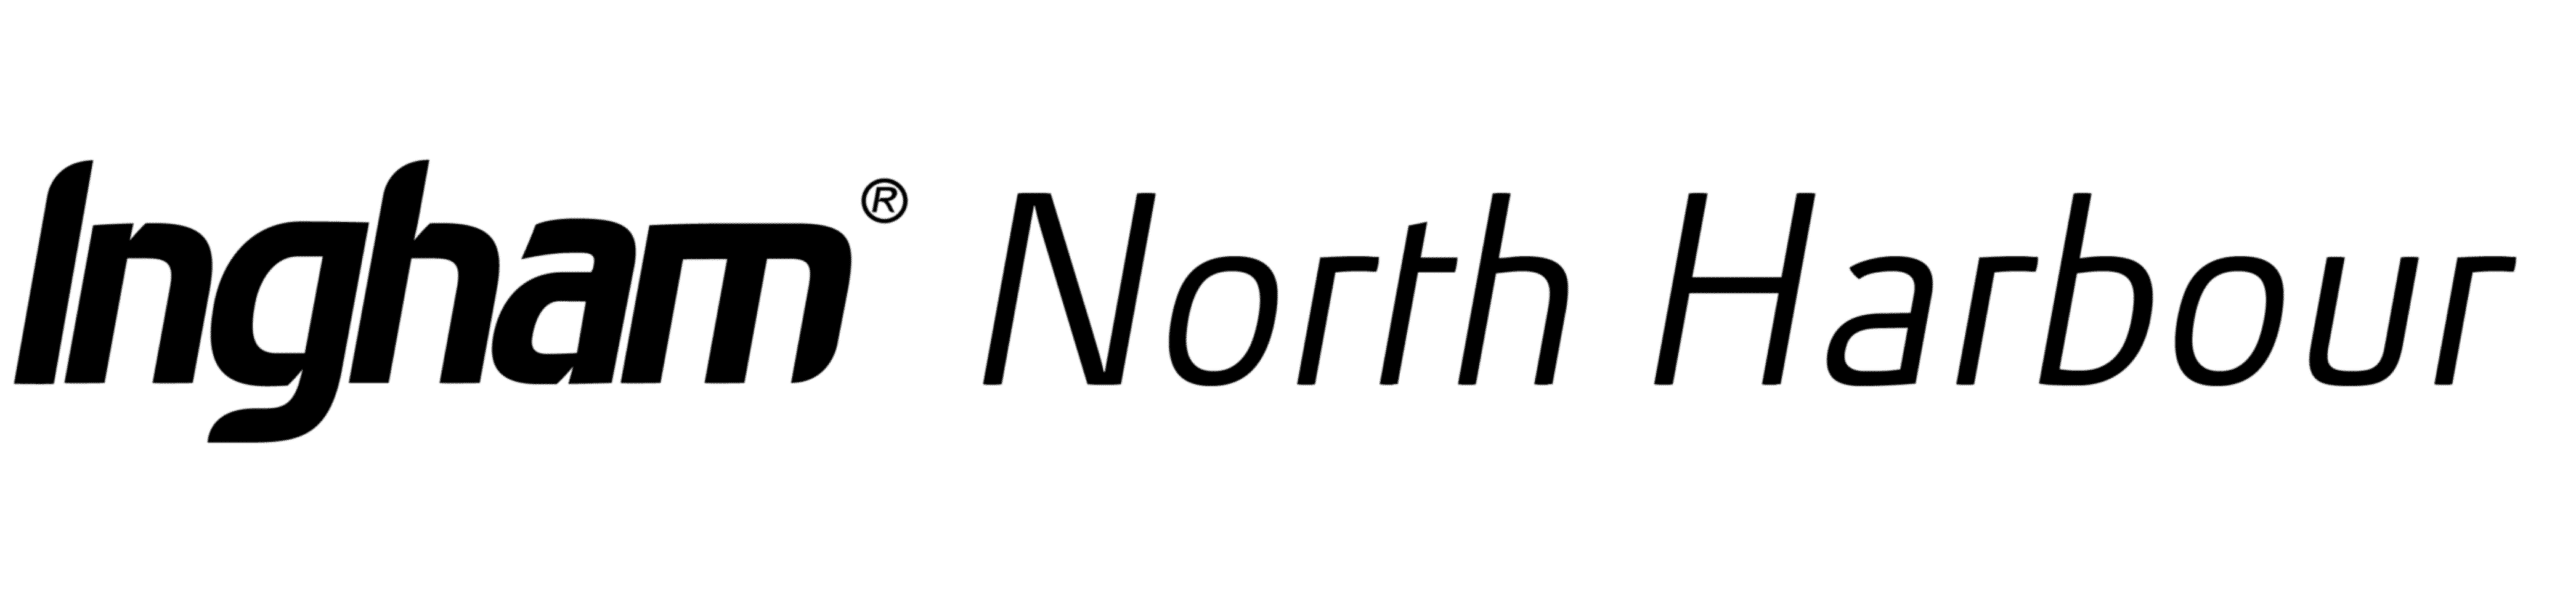 Ingham North Harbour Logo